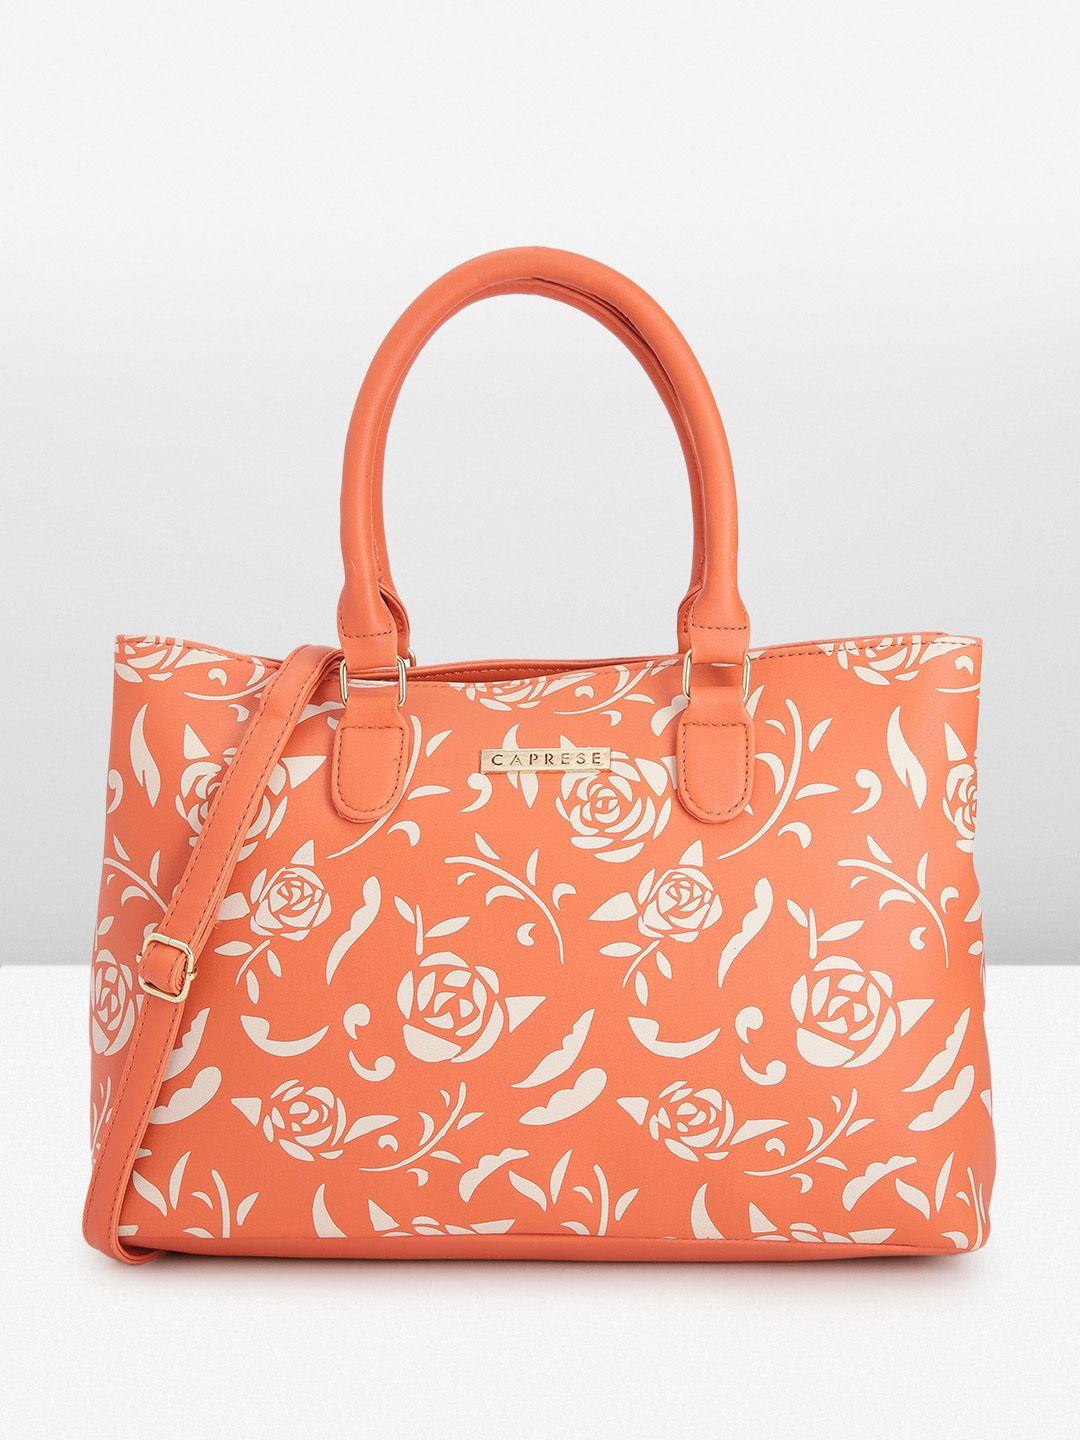 caprese floral print structured handheld bag